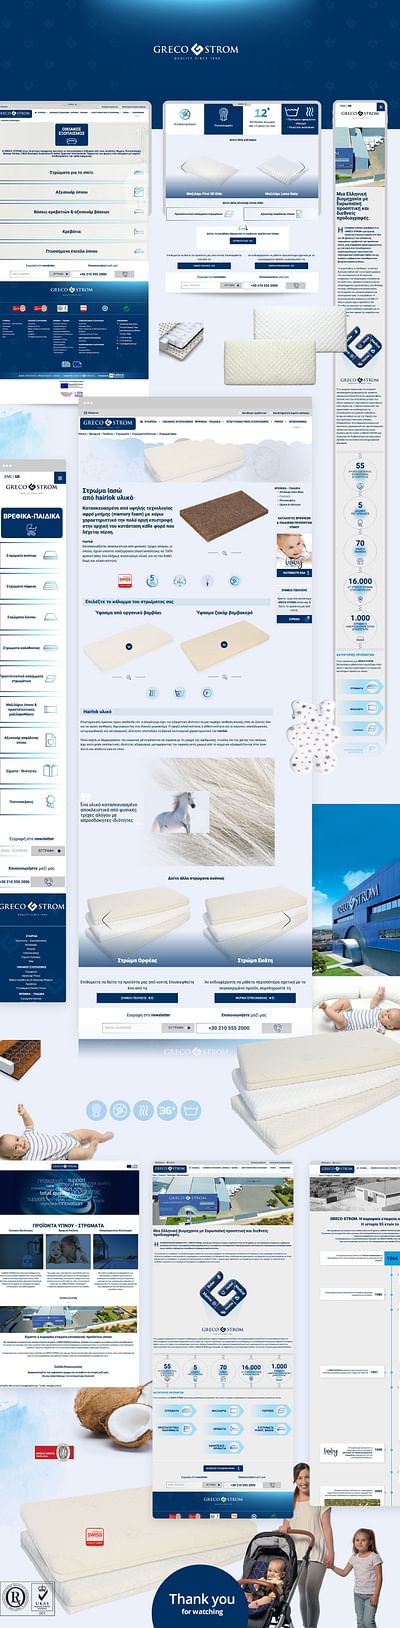 GRECO STROM Sleep mattresses - Digital Strategy